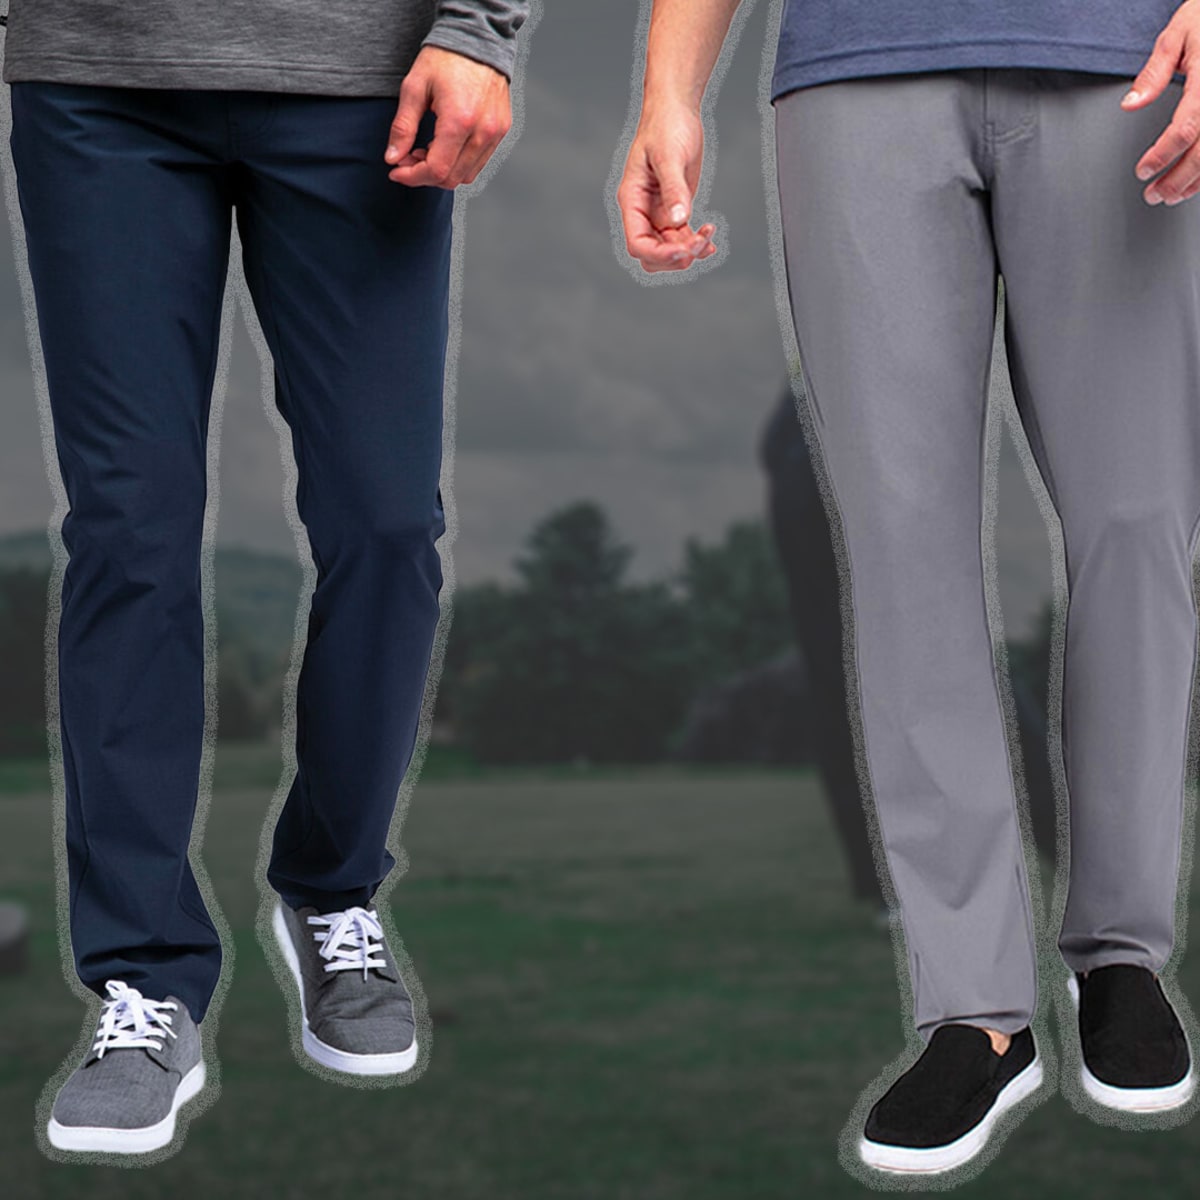 Lululemon Golf Pants Reviews 2020